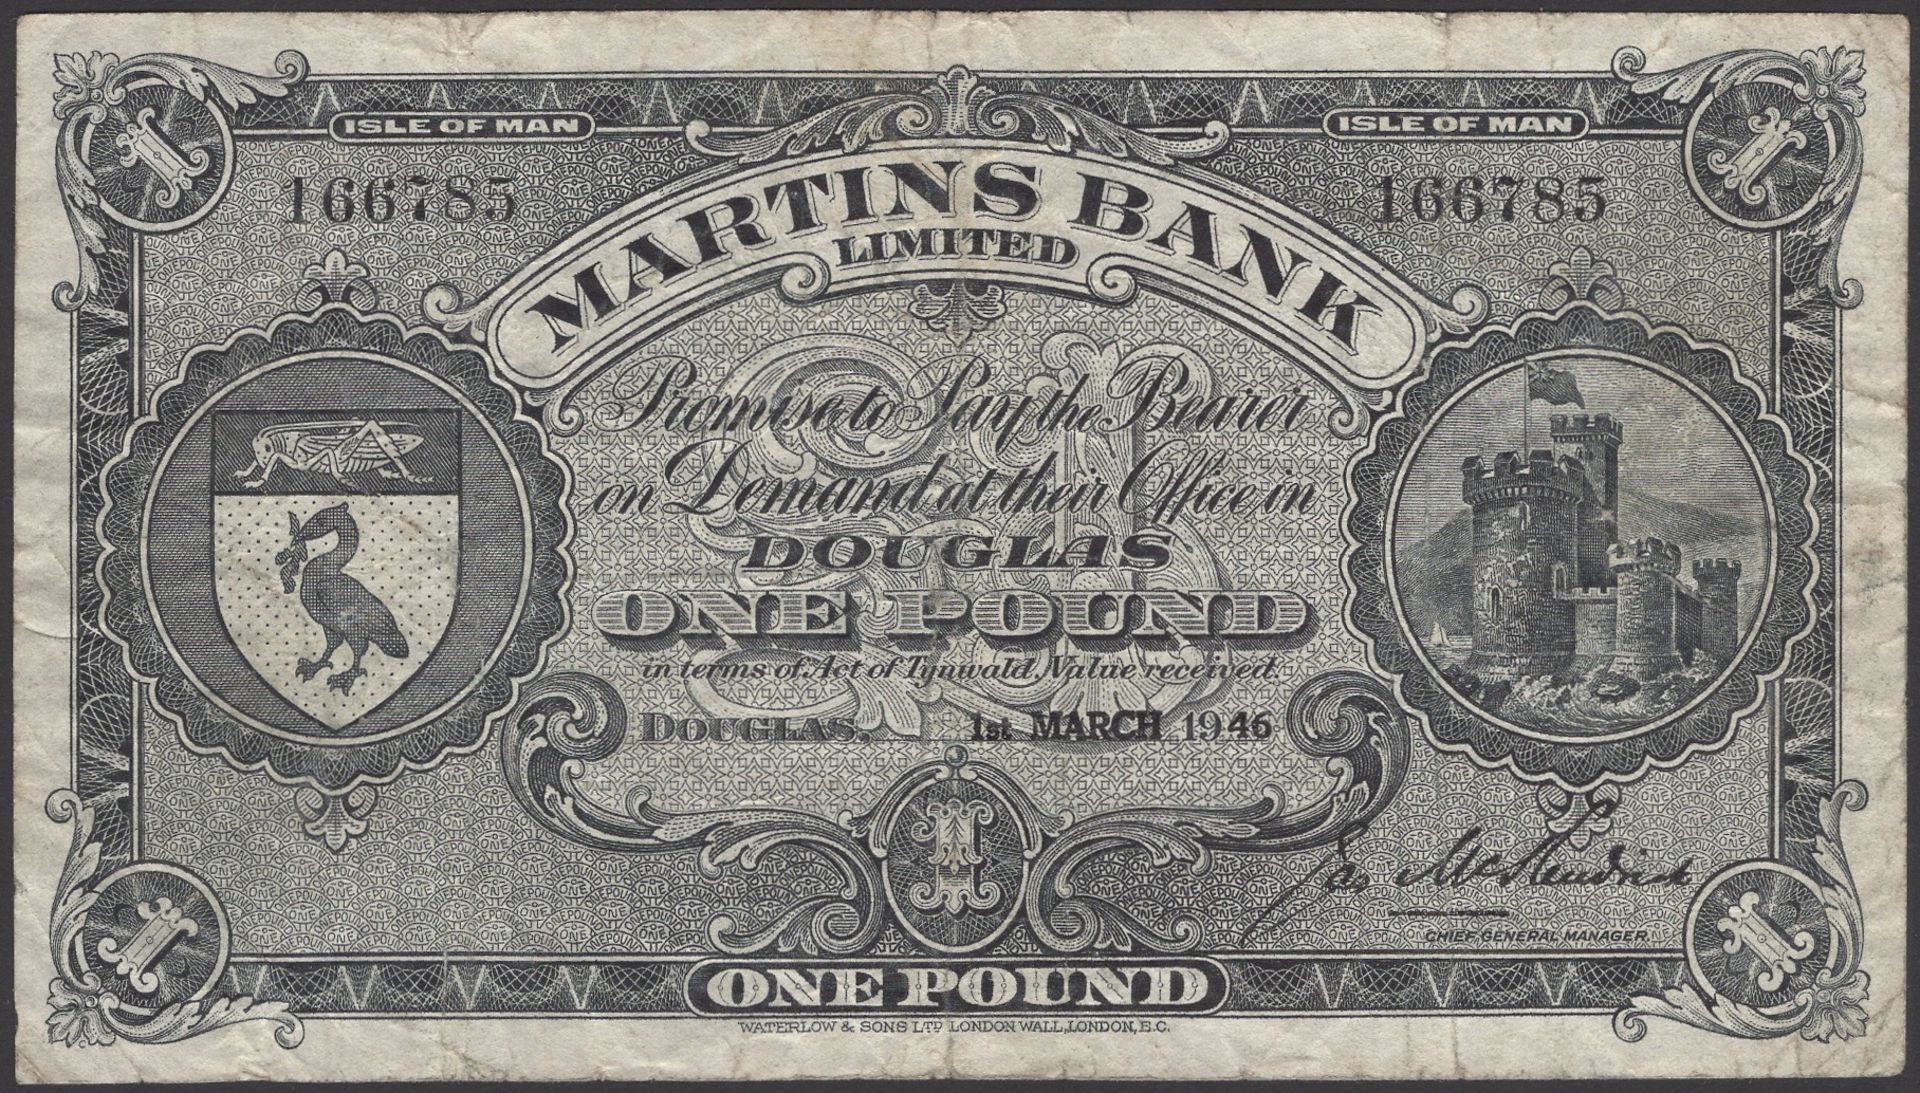 Martins Bank Limited, Â£1, 1 March 1946, serial number 166785, McKendrick signature, original...